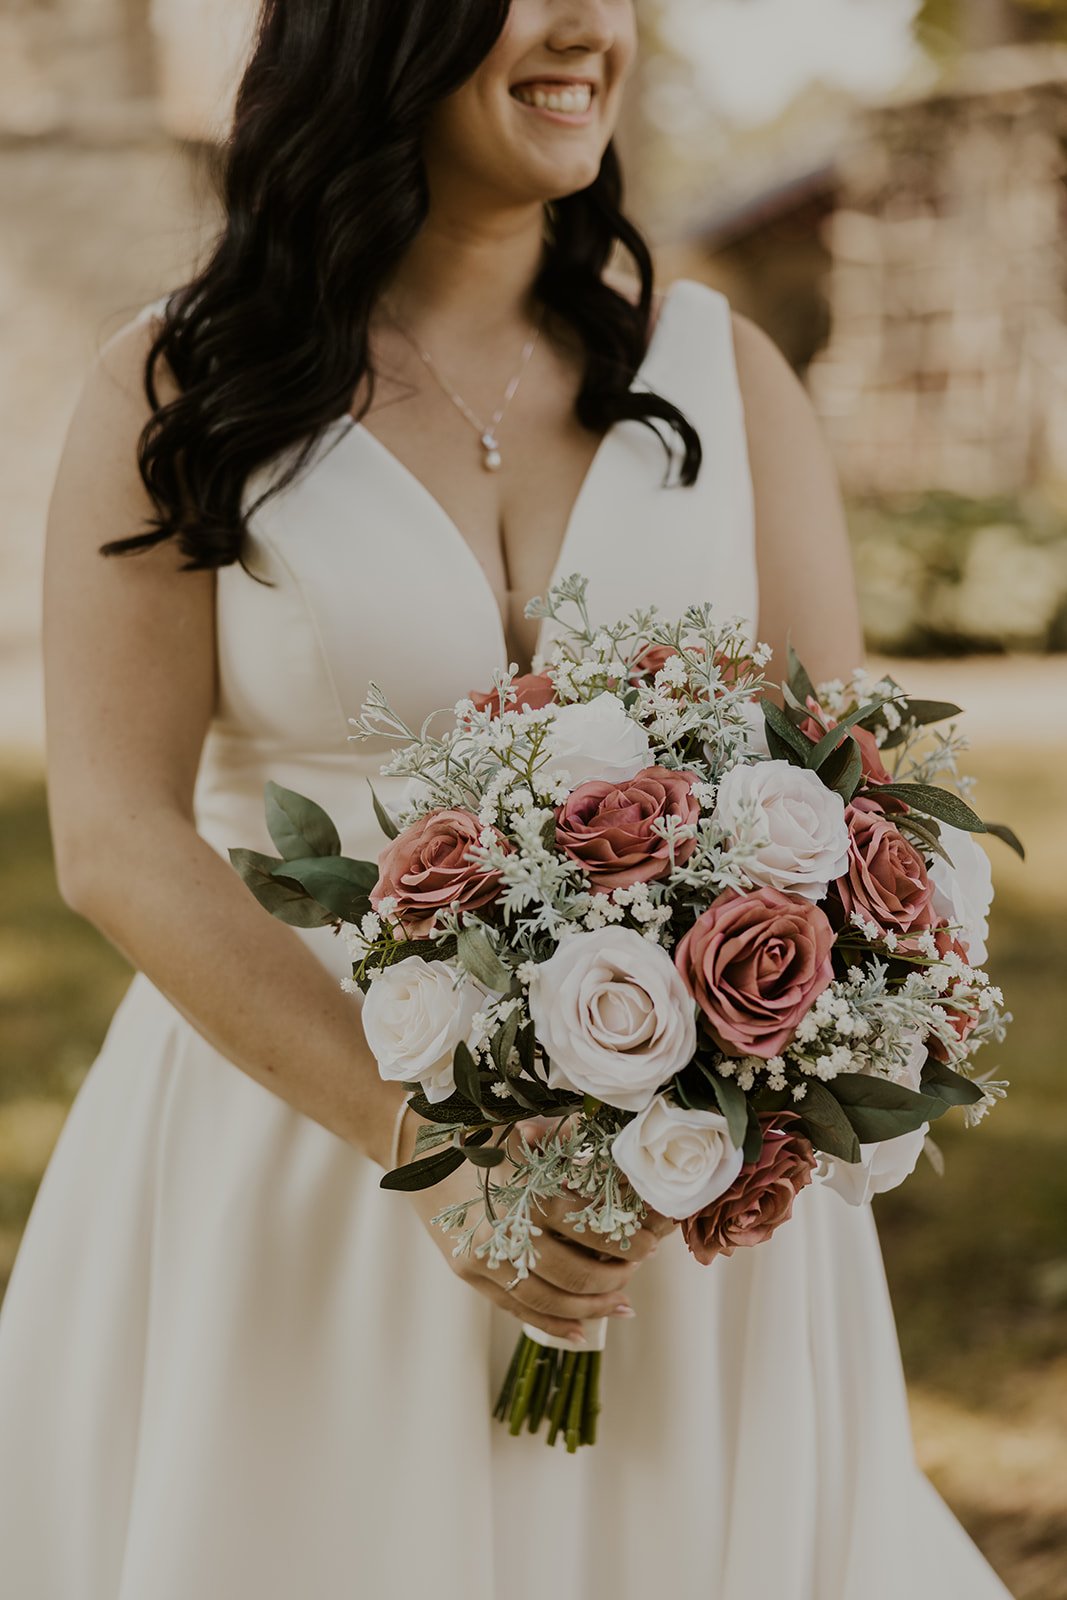 Elaina Artificial Mauve Rose Bridal Bouquet - Real Touch White and Mauve  Rose Wedding Bouquet